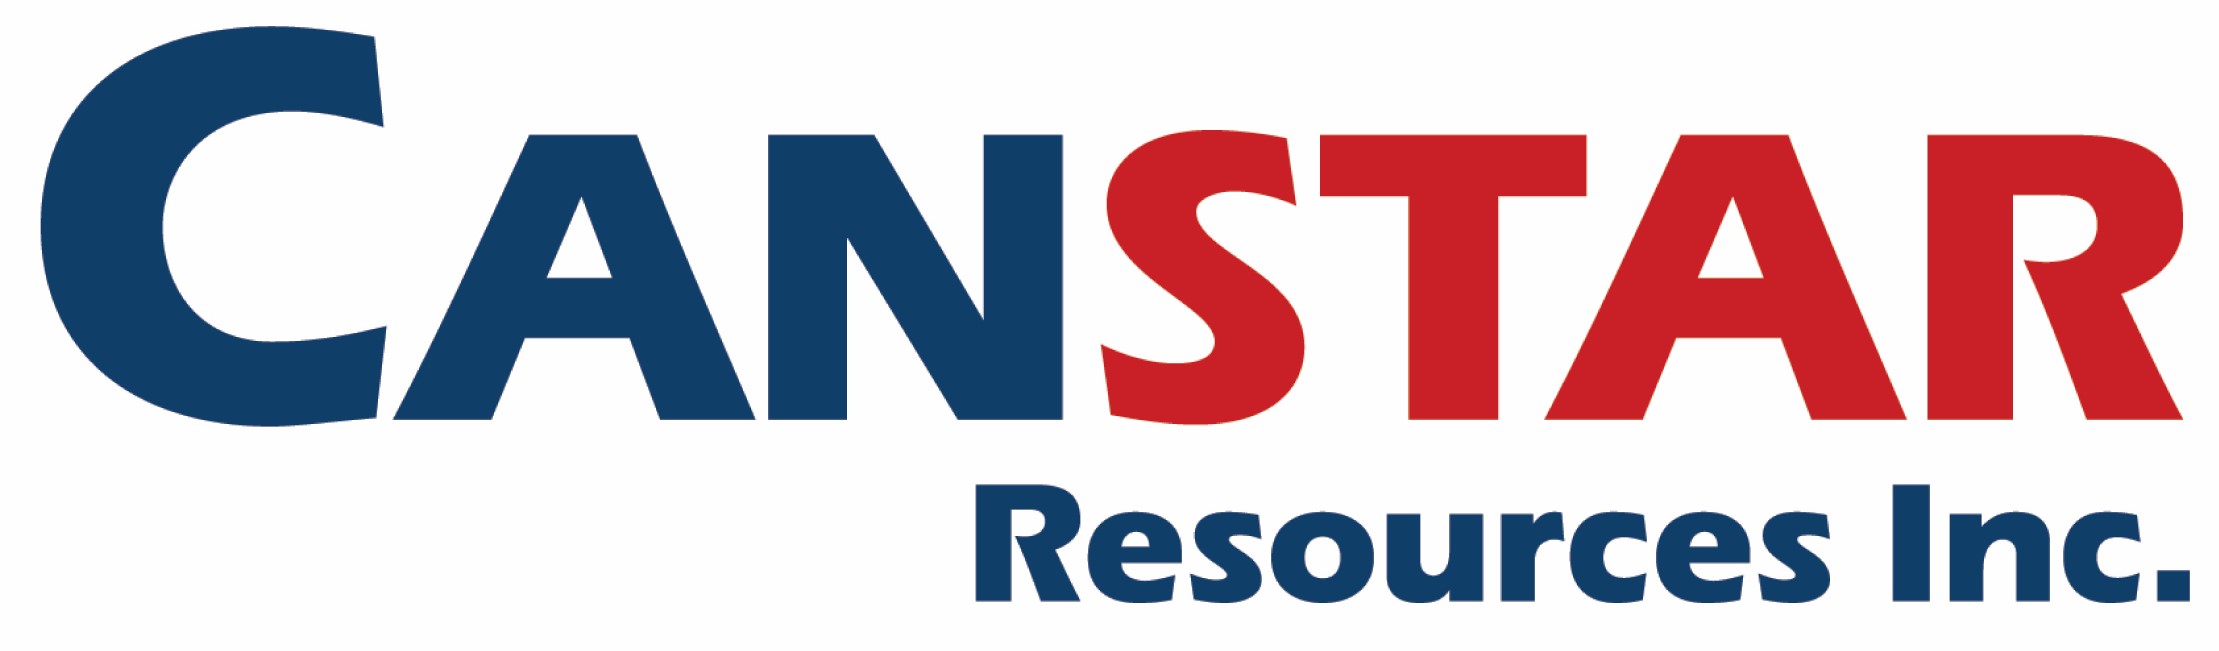 Canstar Resources Inc. Logo